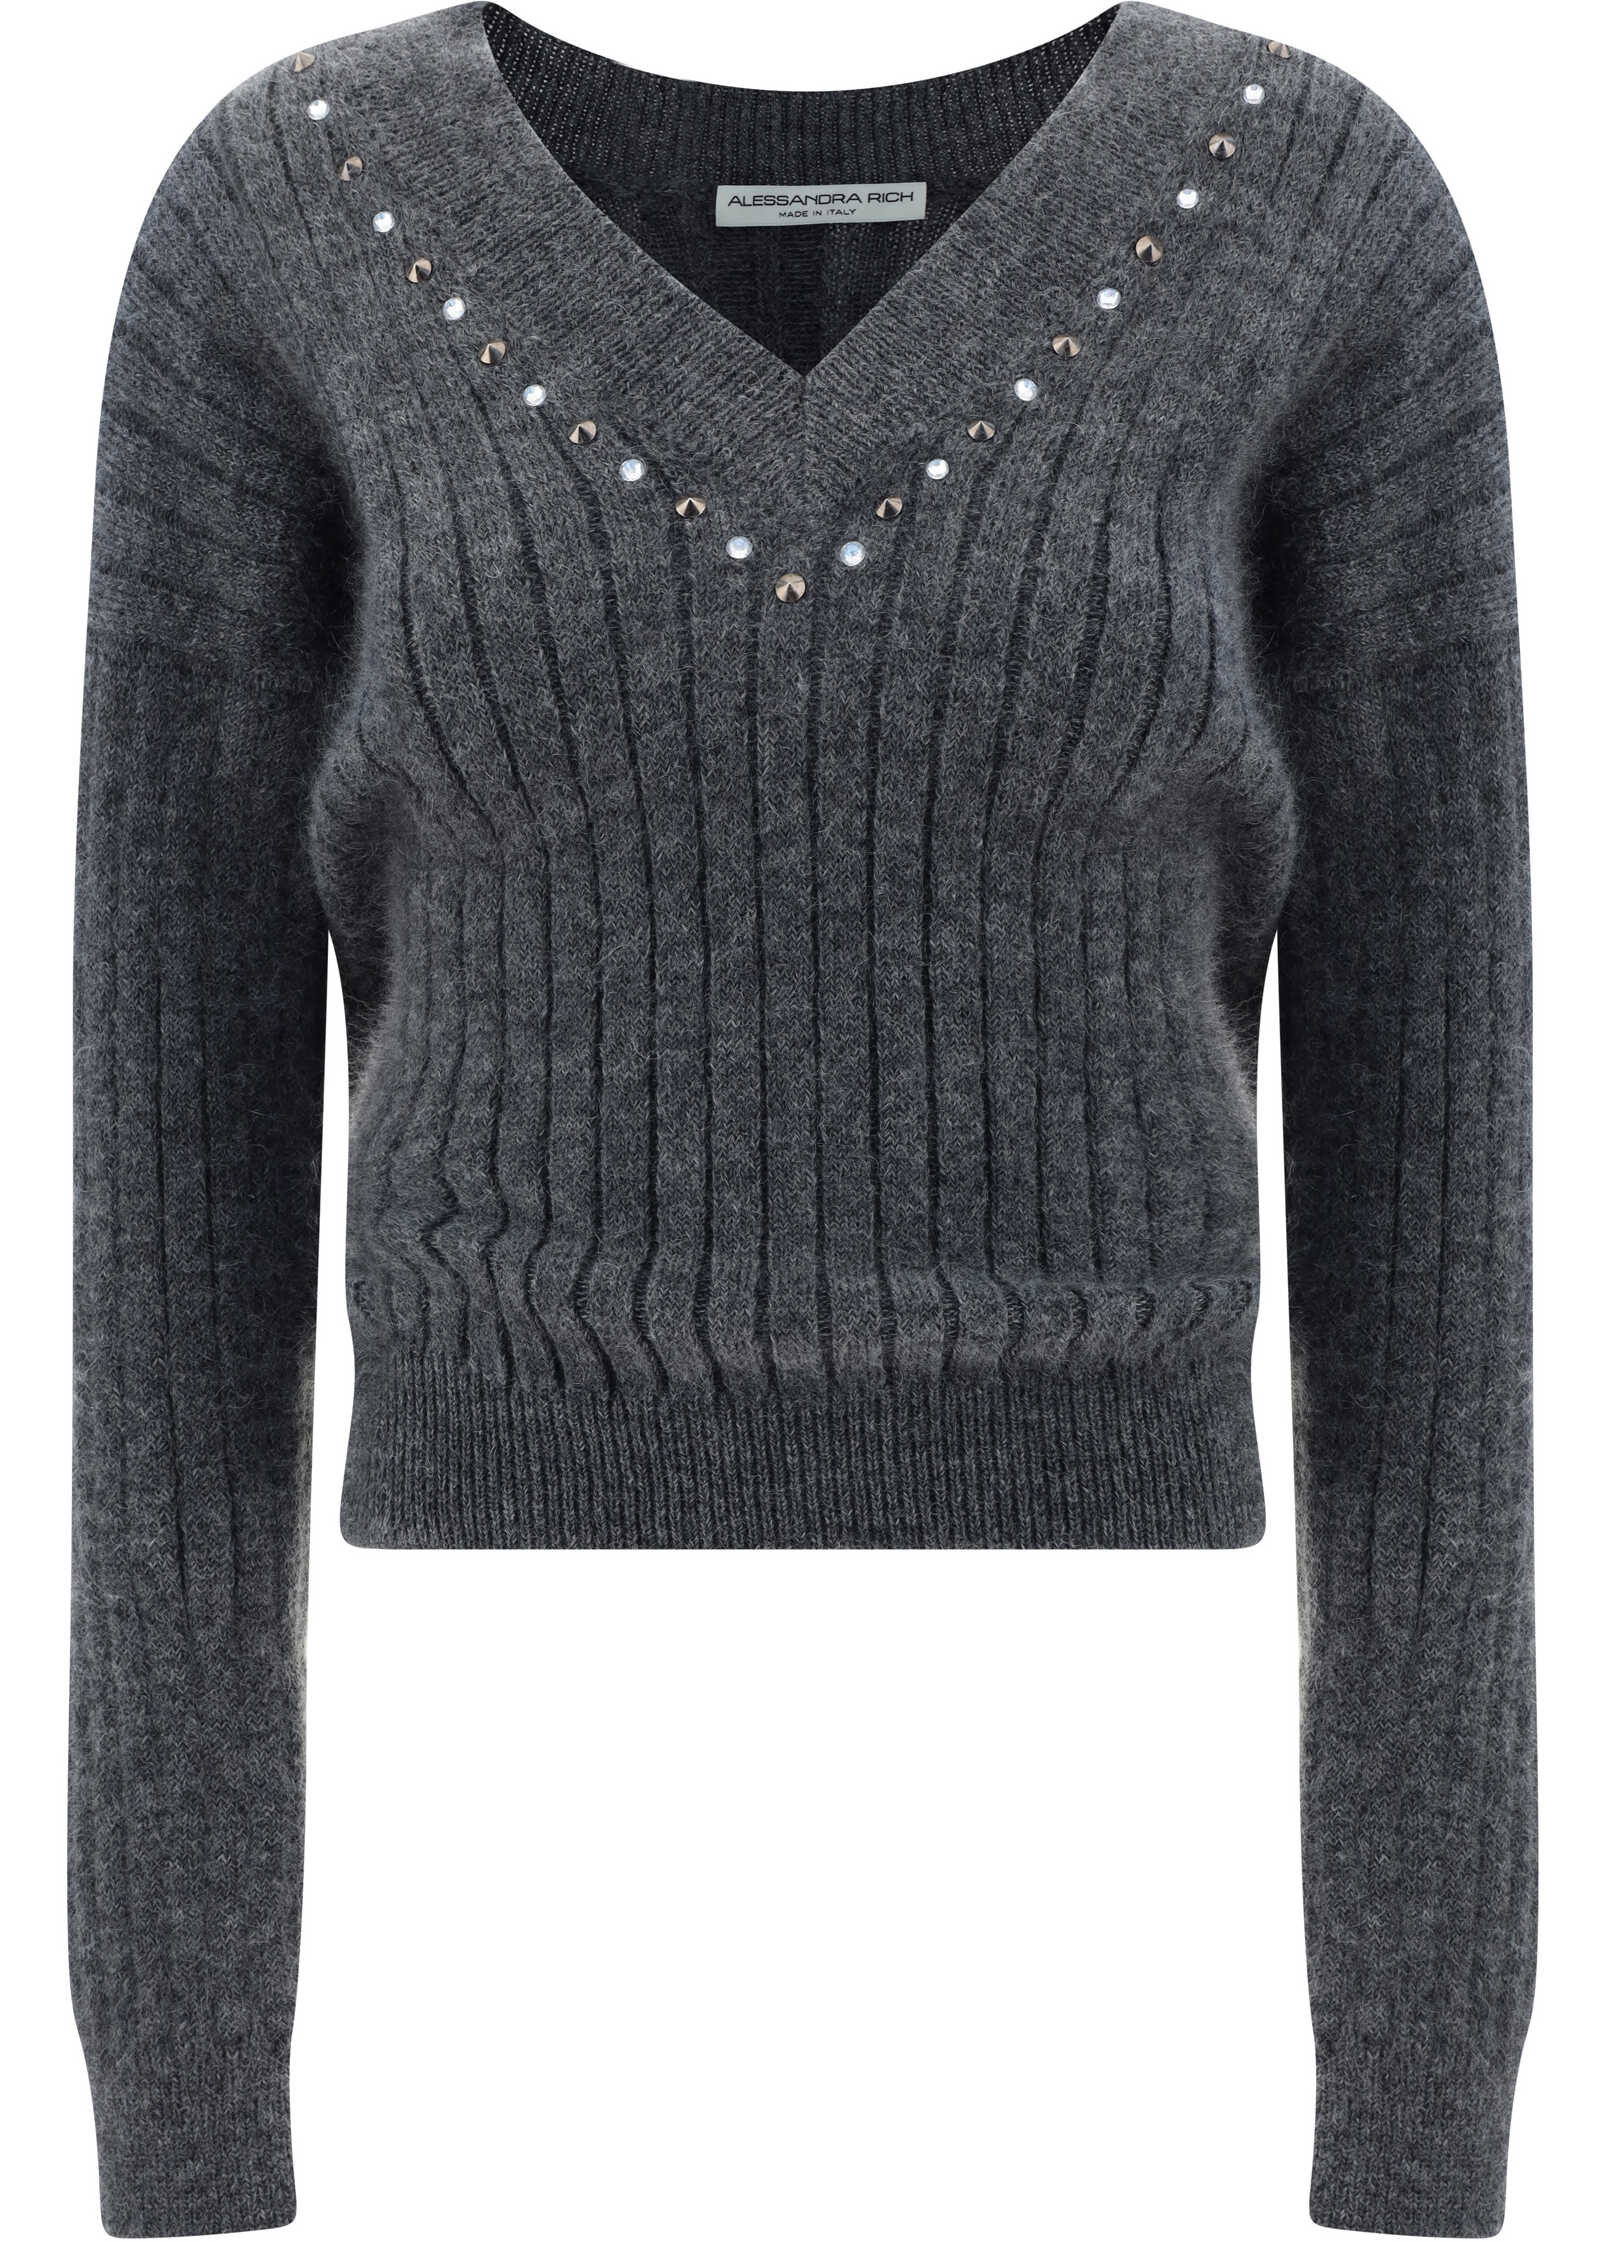 Alessandra Rich Sweater GREY MELANGE